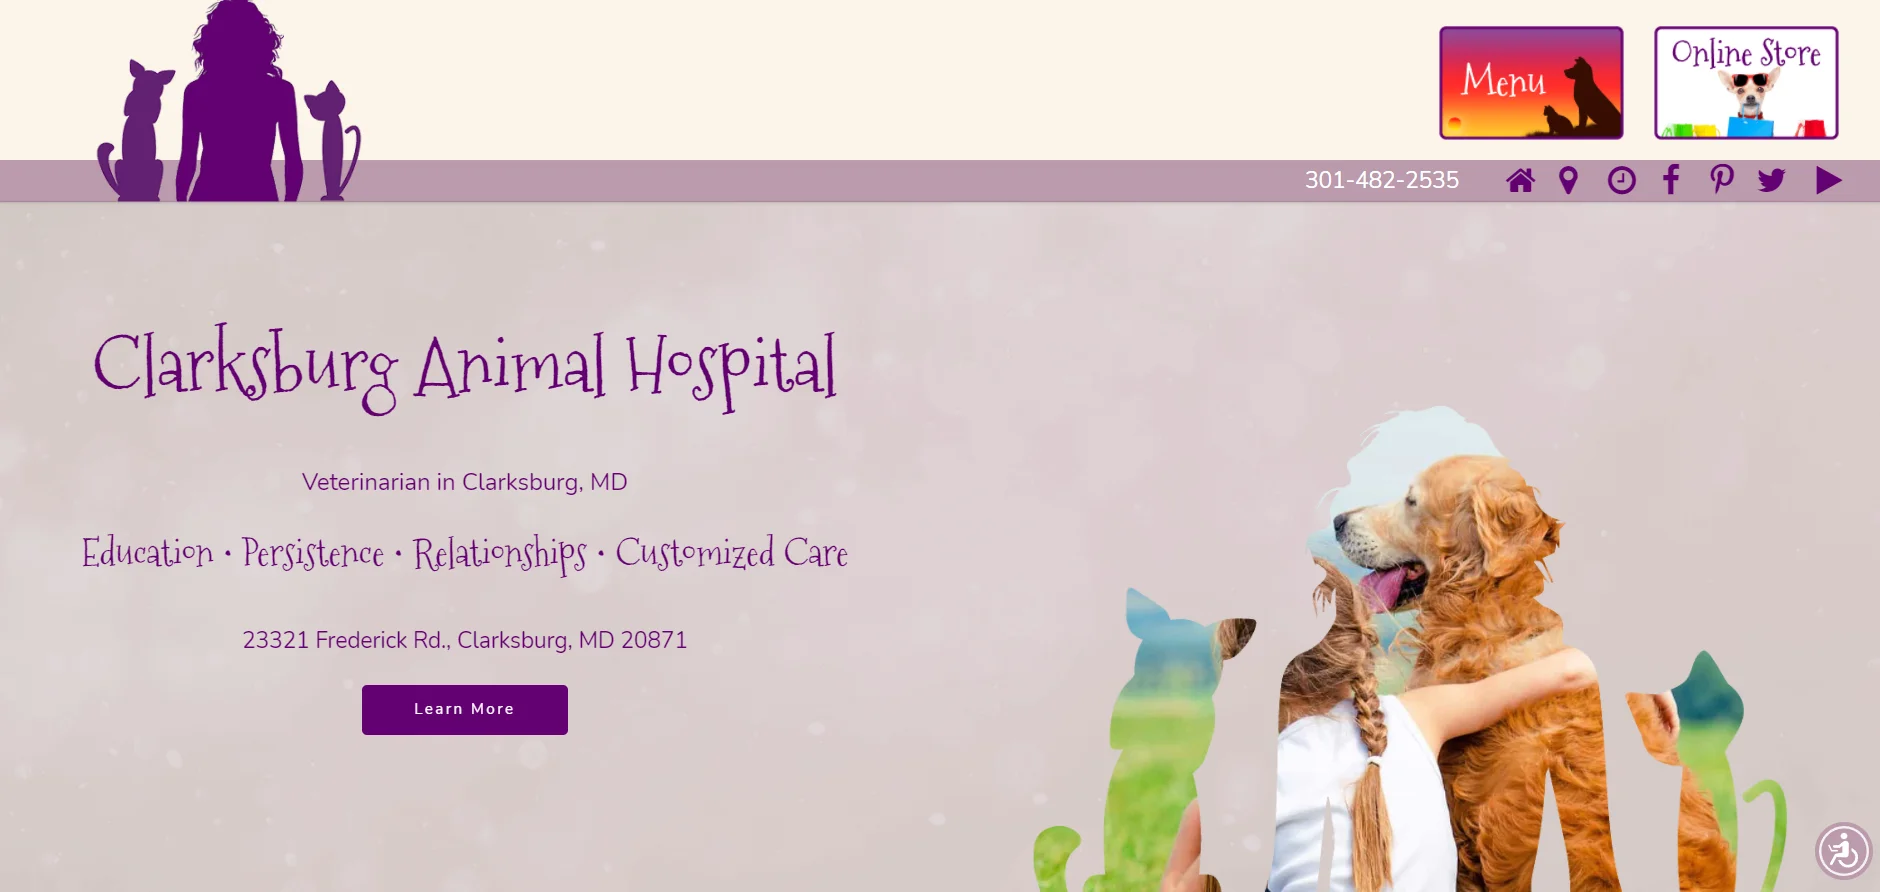 Clarksburg Animal Hospital logo and website